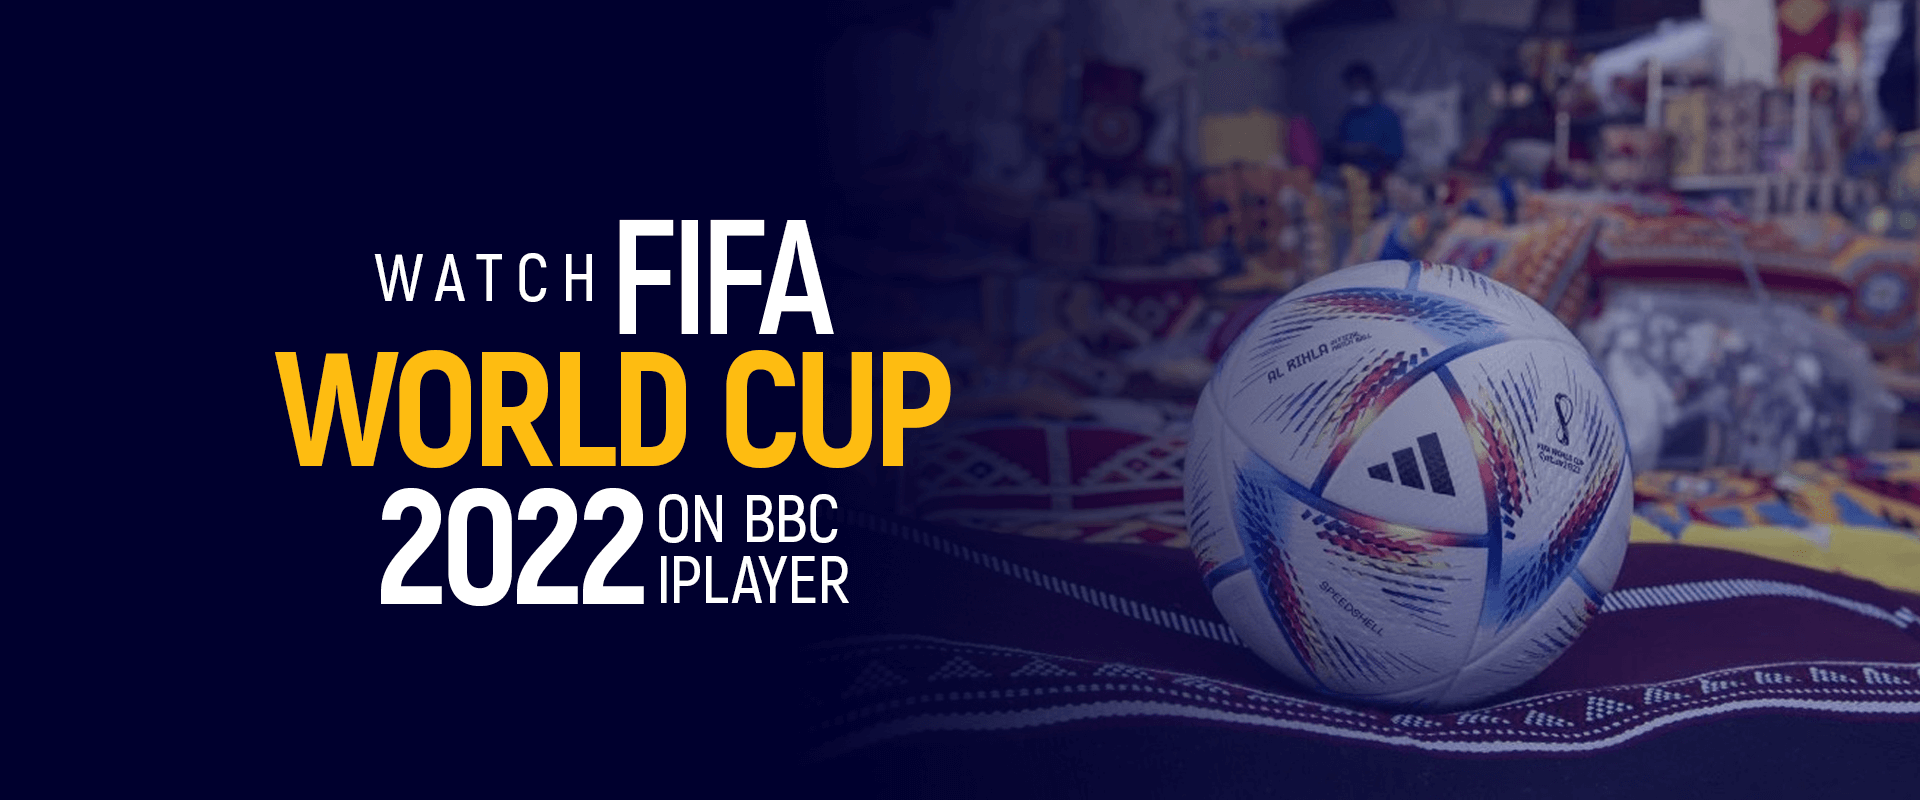 bbc live world cup